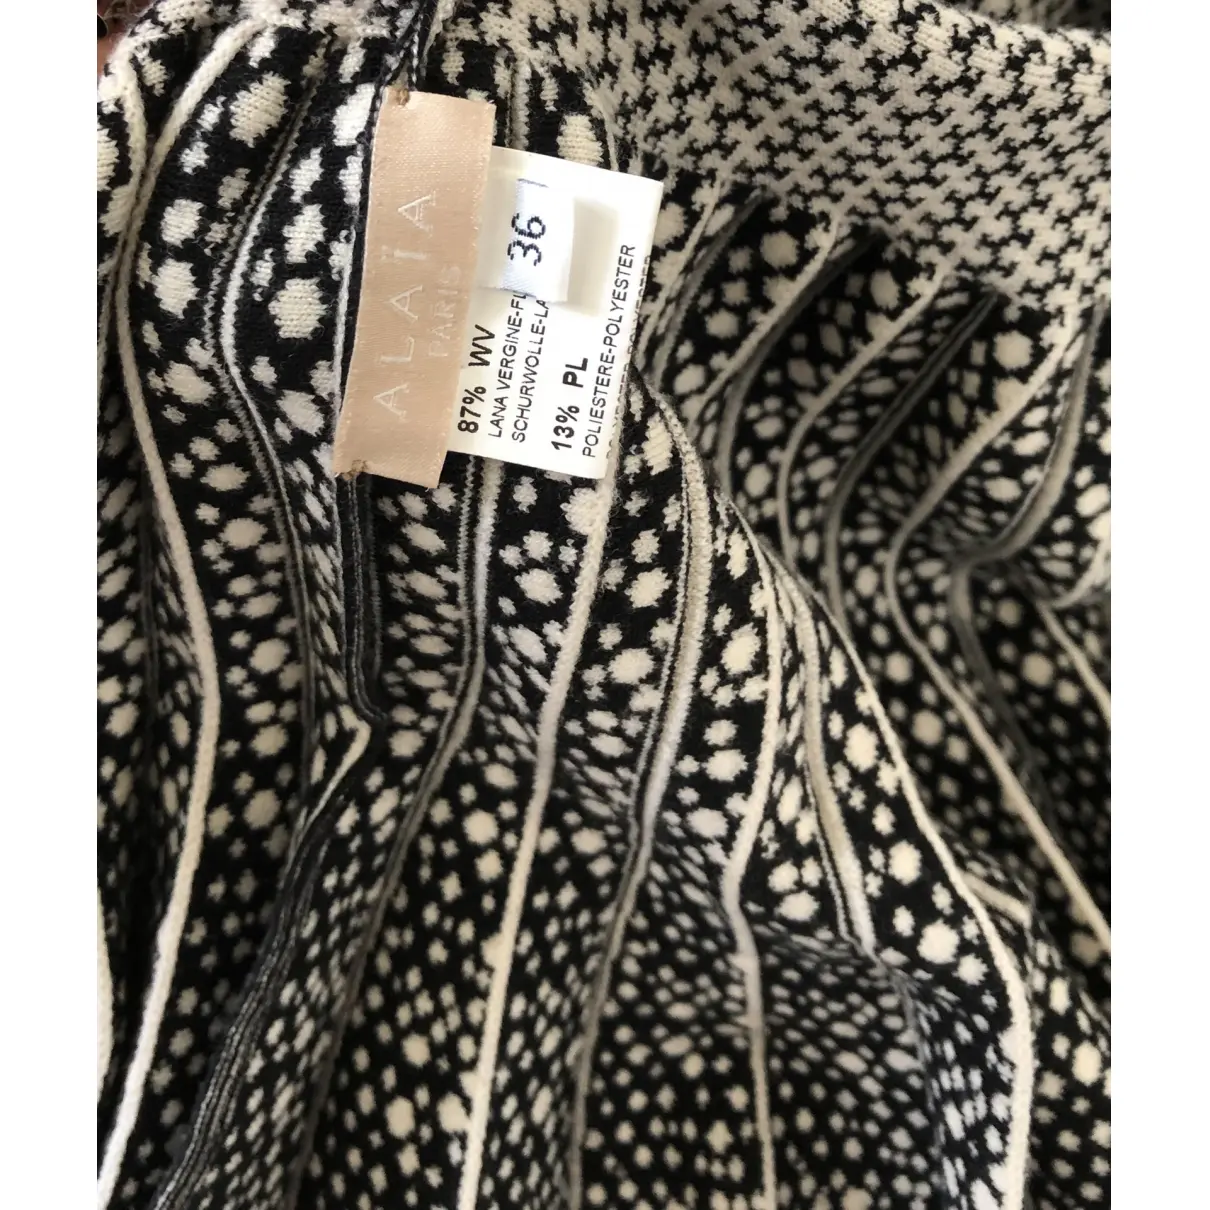 Buy Alaïa Wool mid-length dress online